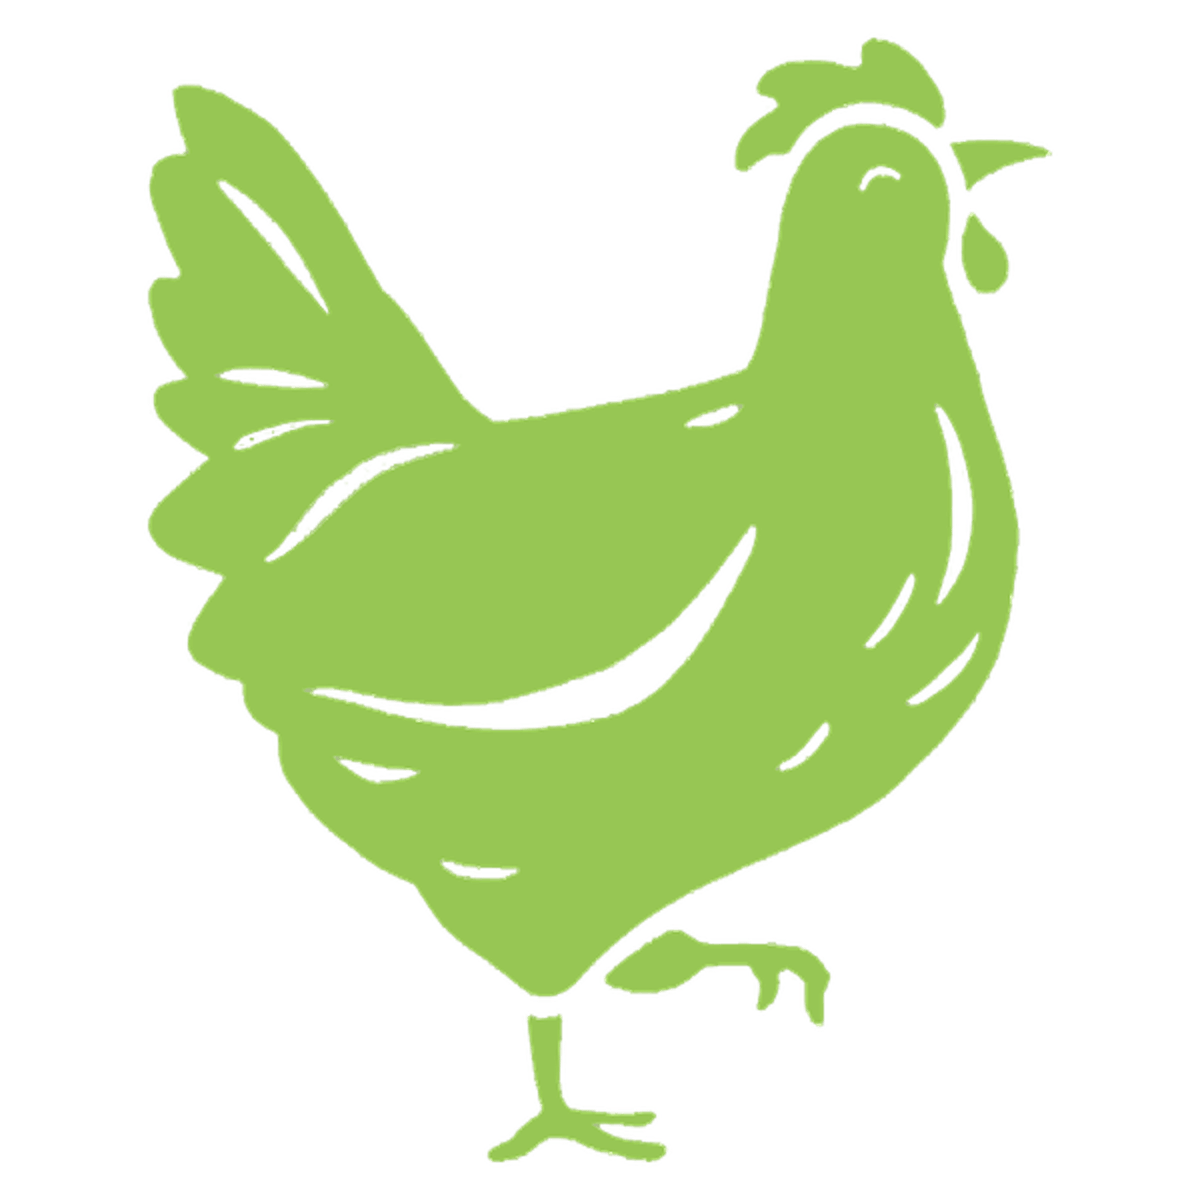 a chicken clip art